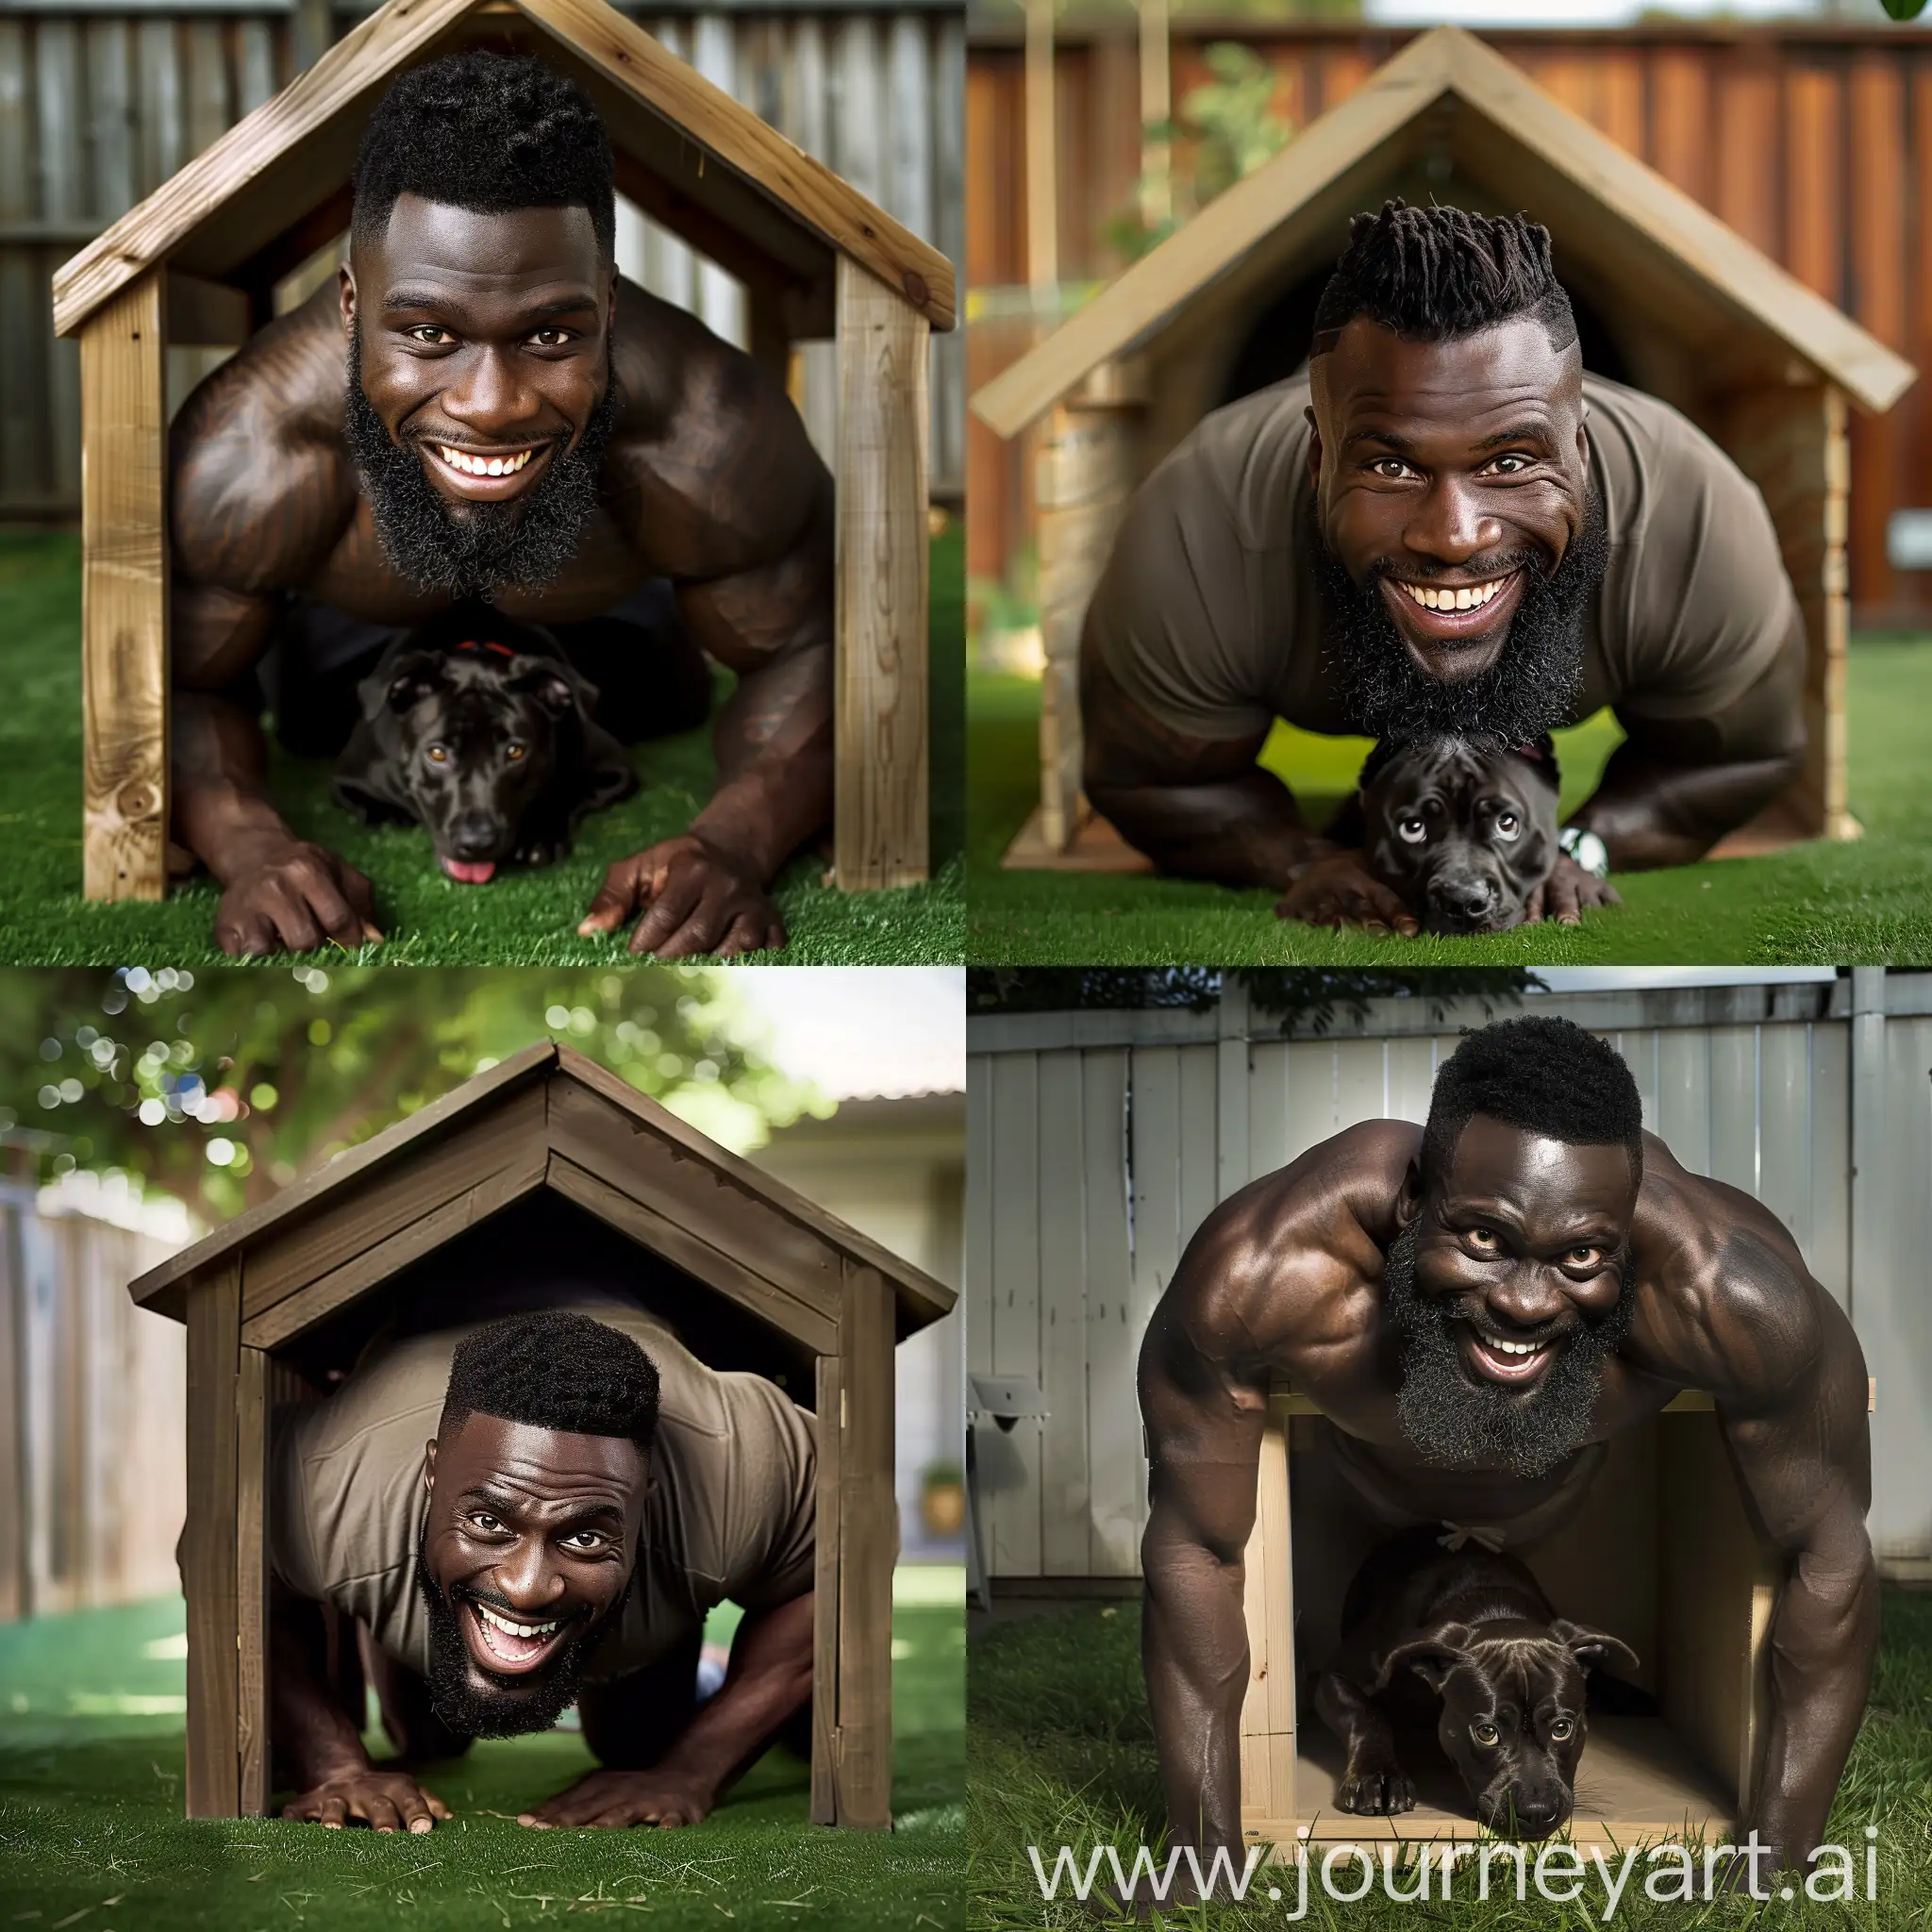 Smiling-Black-Man-Crawling-Inside-Dog-House-on-a-Sunny-Day